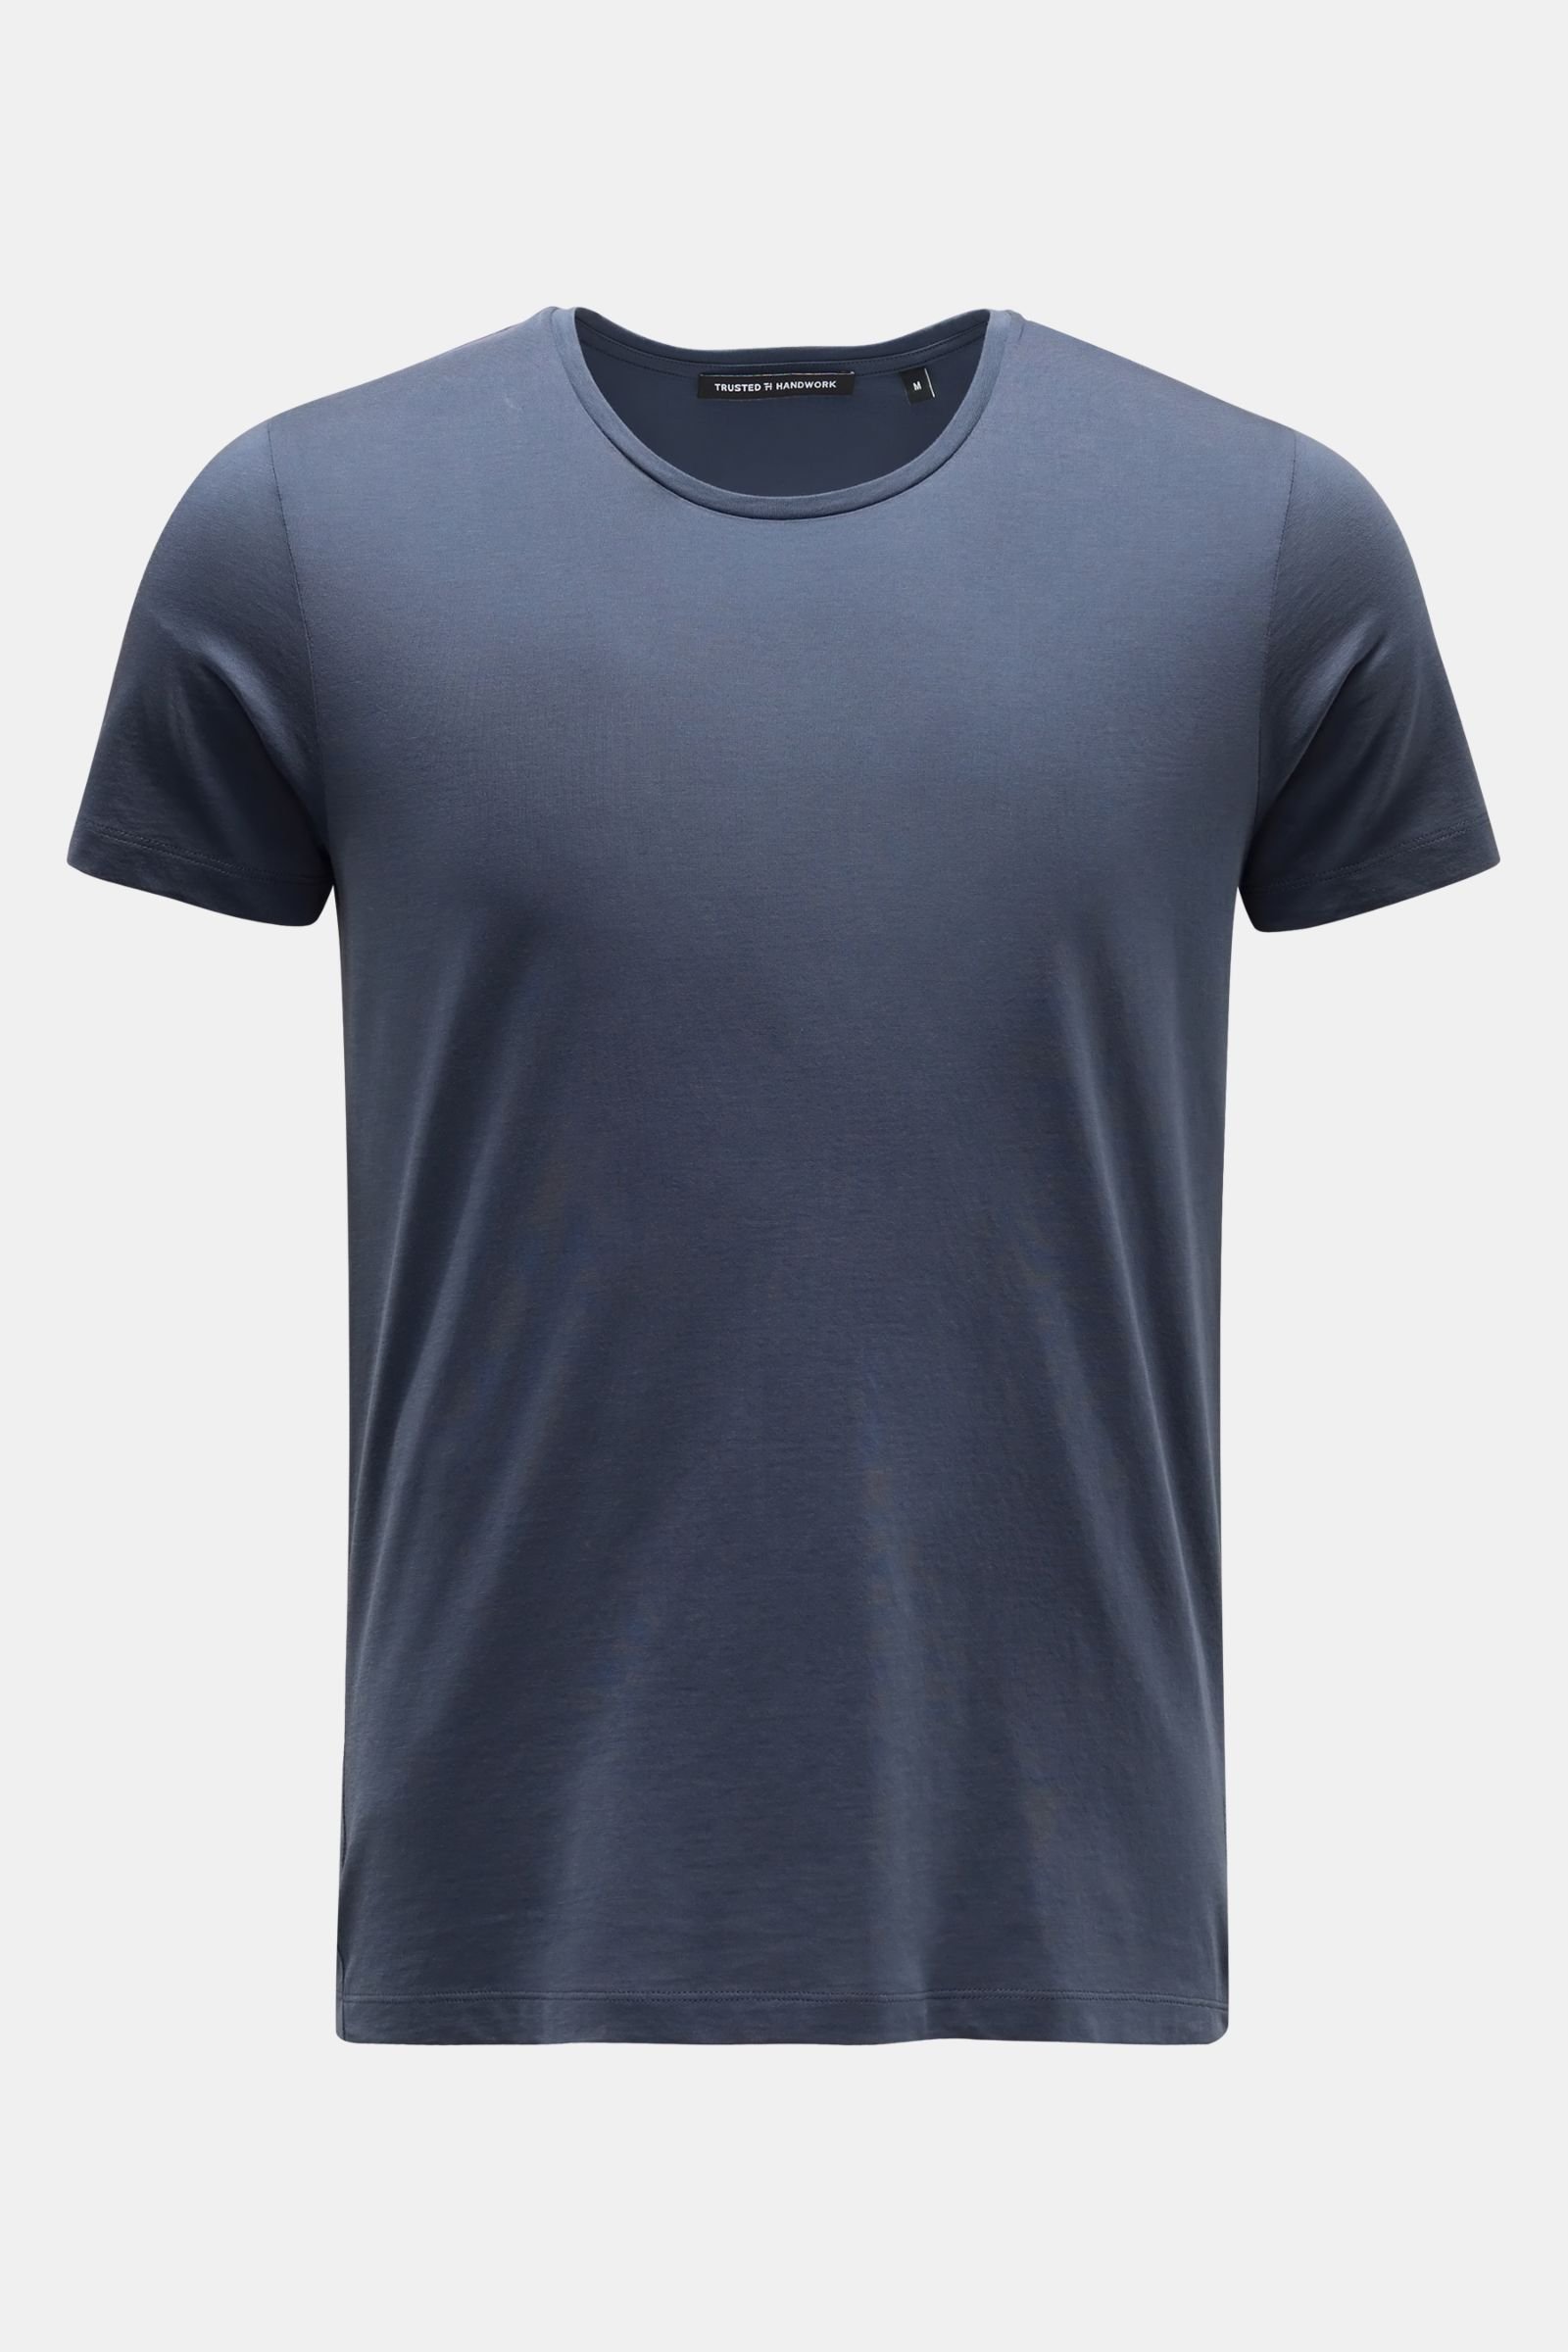 Crew neck T-shirt 'Washington' grey-blue